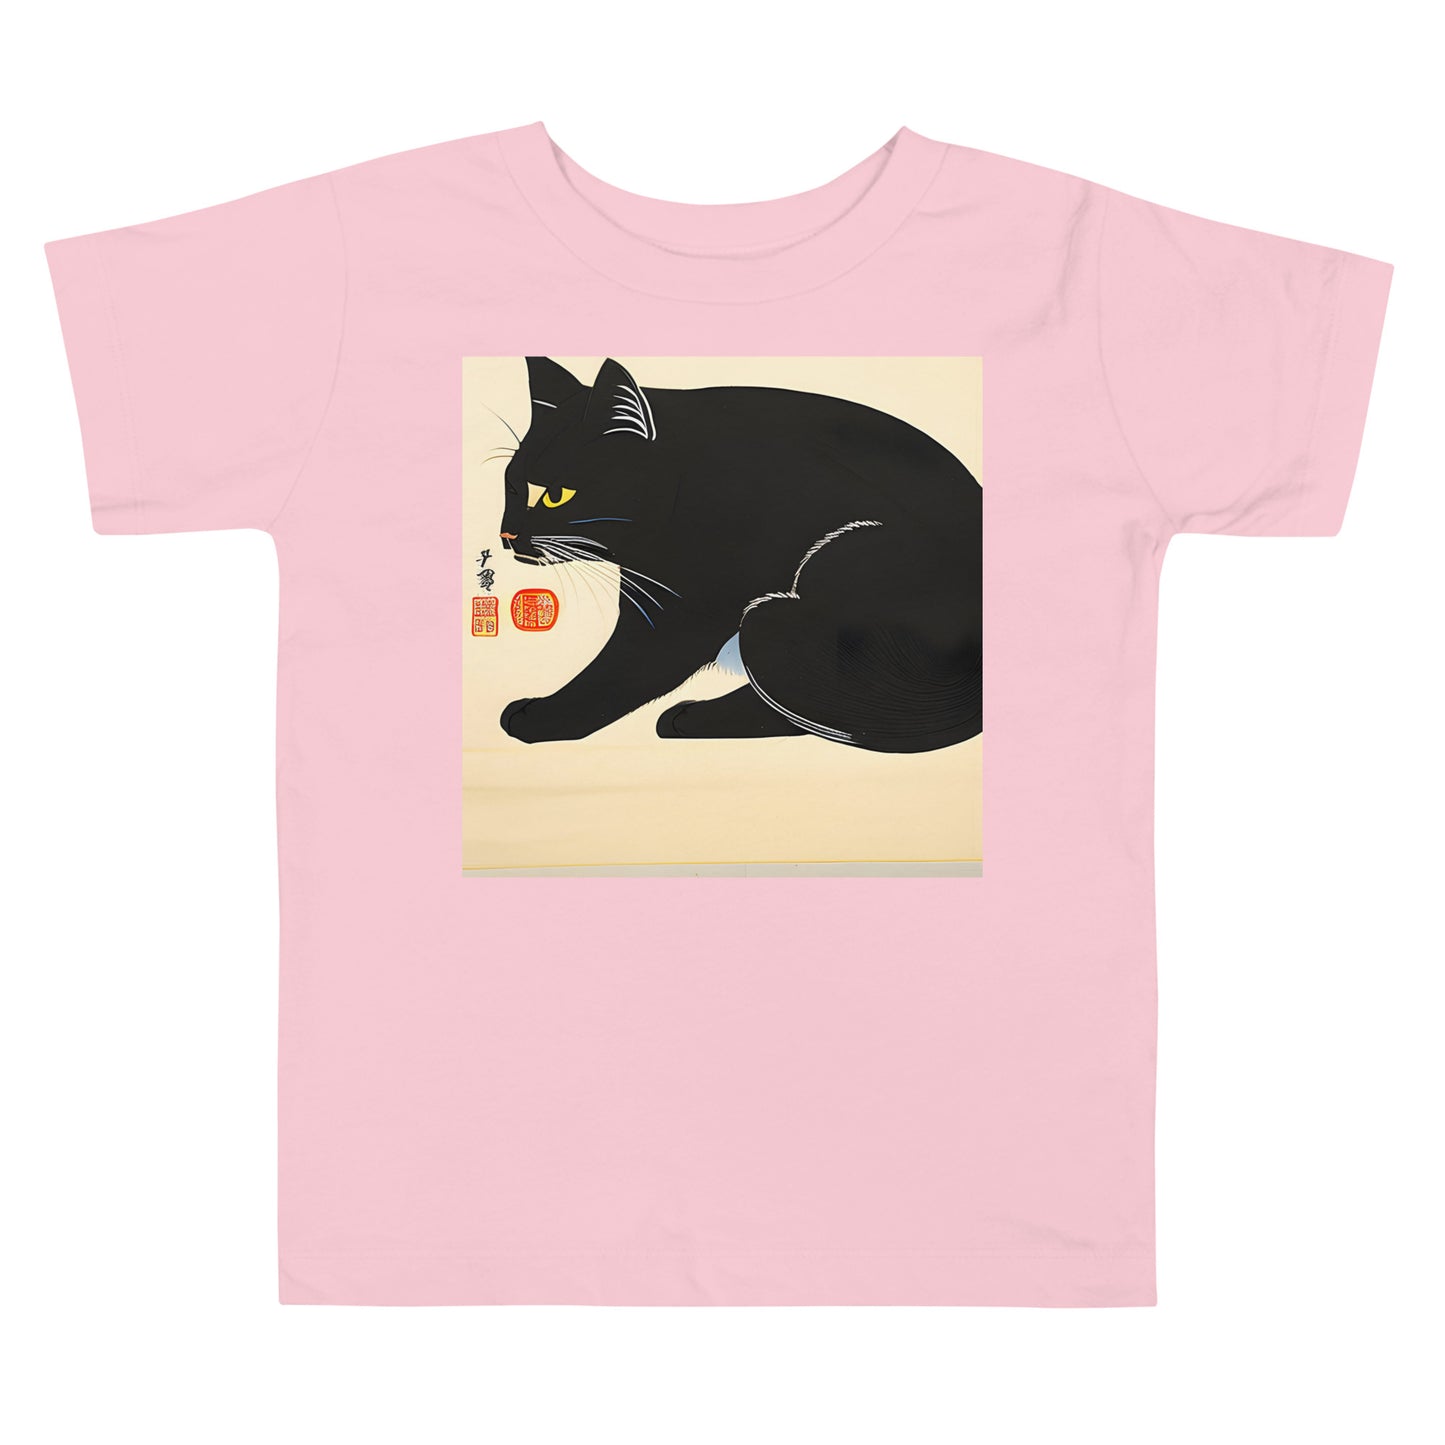 Meowsome Toddler's T-Shirt - 019